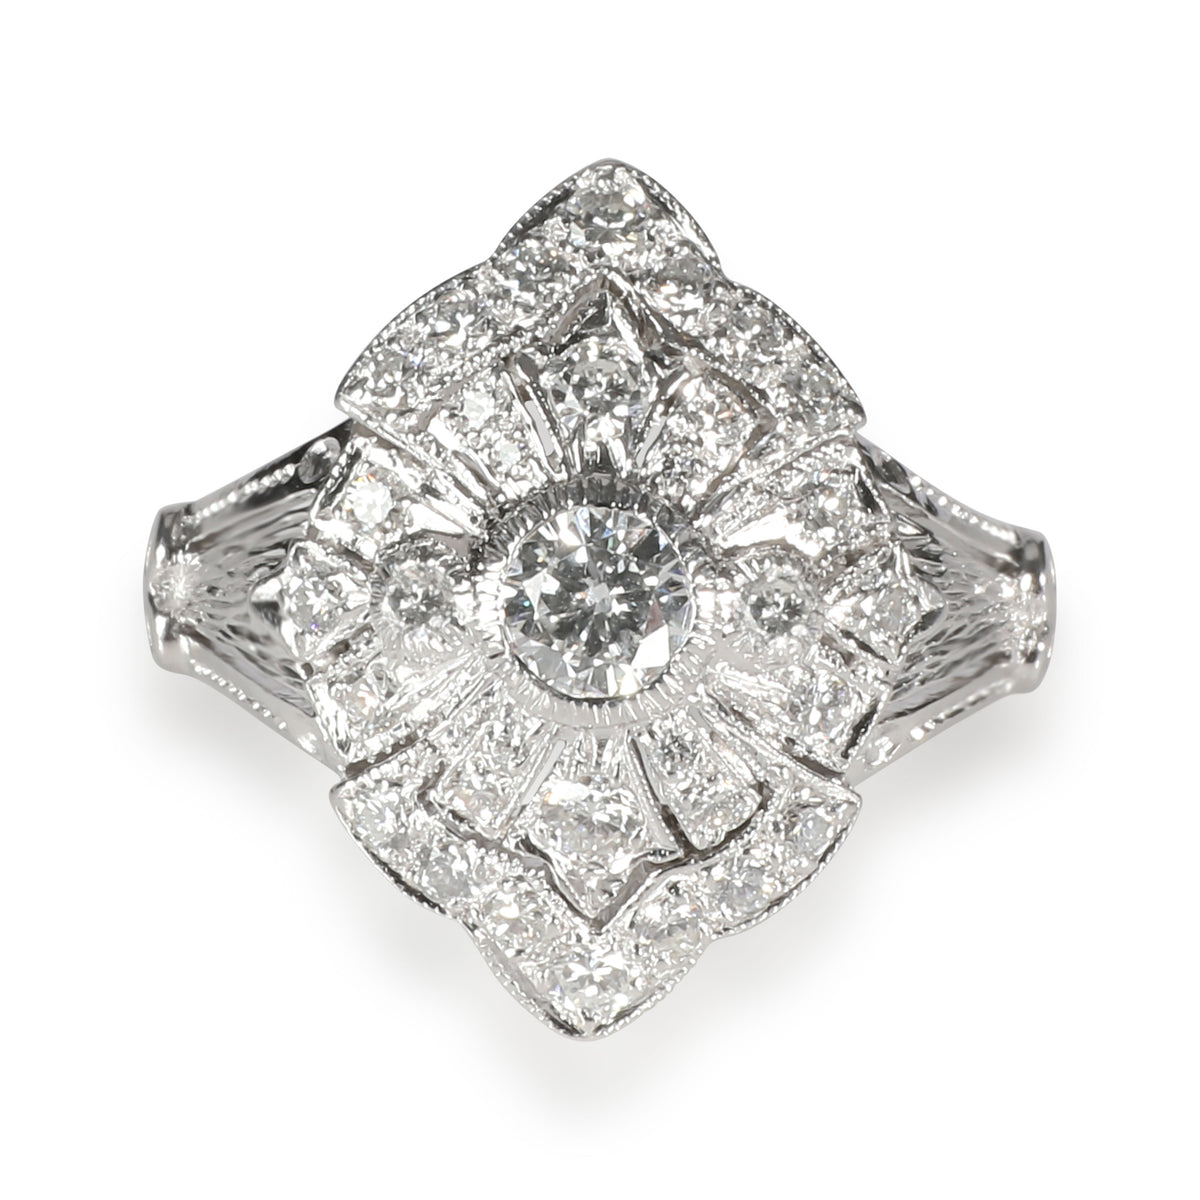 Vintage Inspired Diamond Ring in 18K White Gold 0.50 CTW